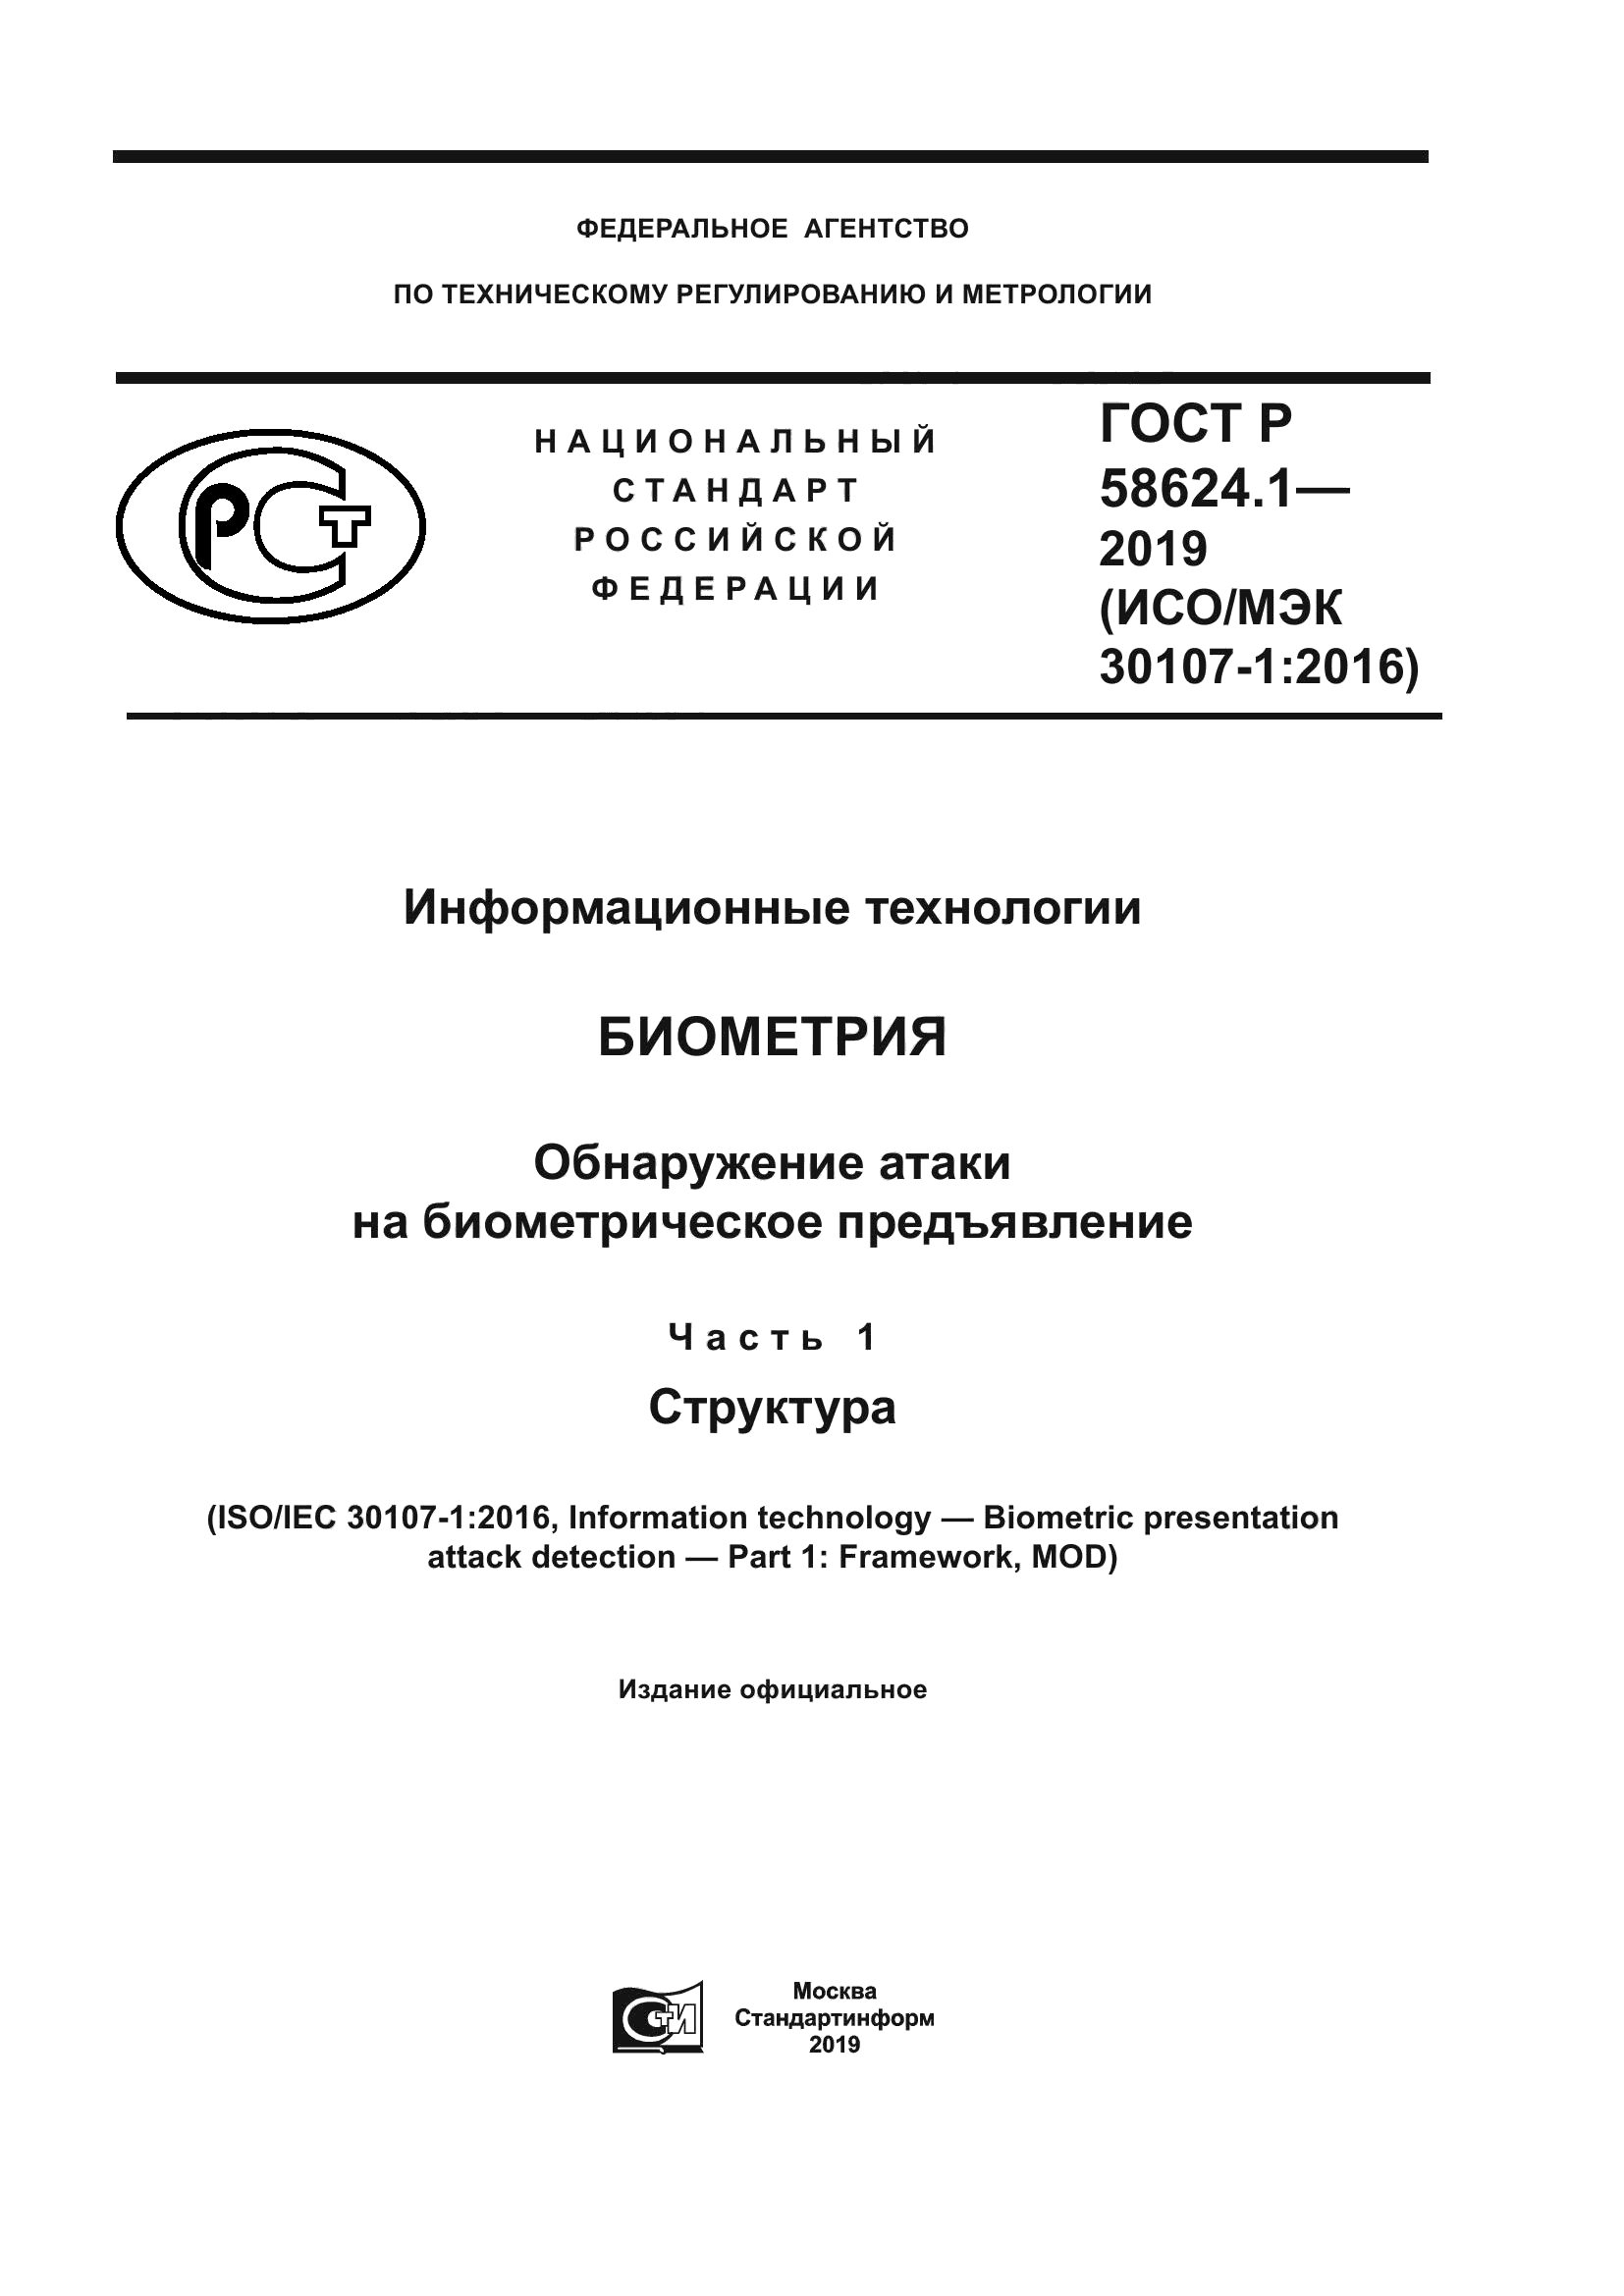 ГОСТ Р 58624.1-2019